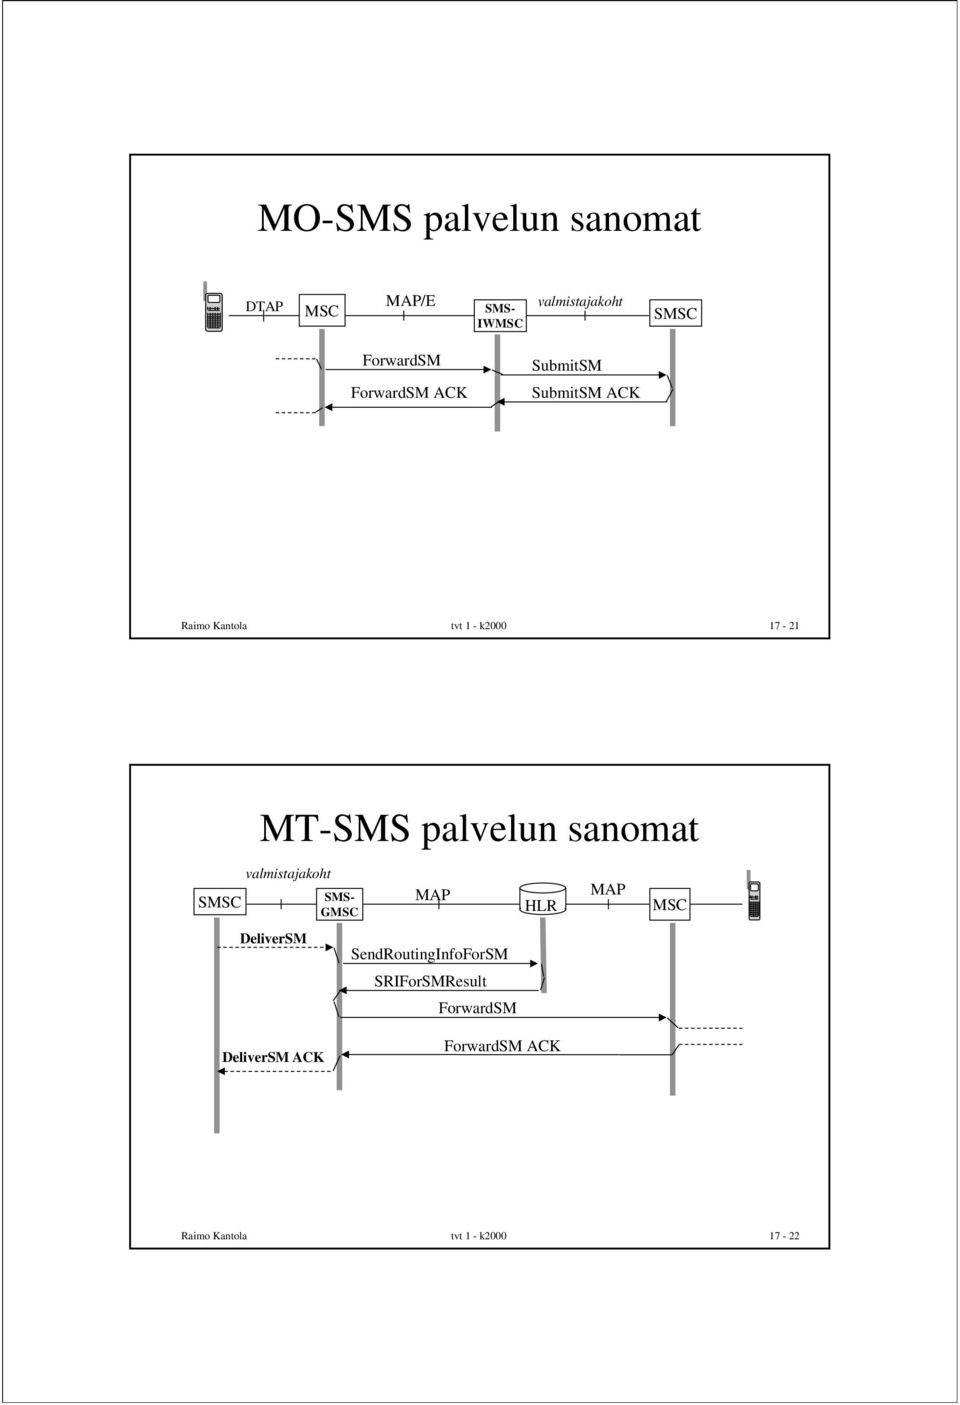 MT-SMS palvelun sanomat S valmistajakoht SMS- G DeliverSM